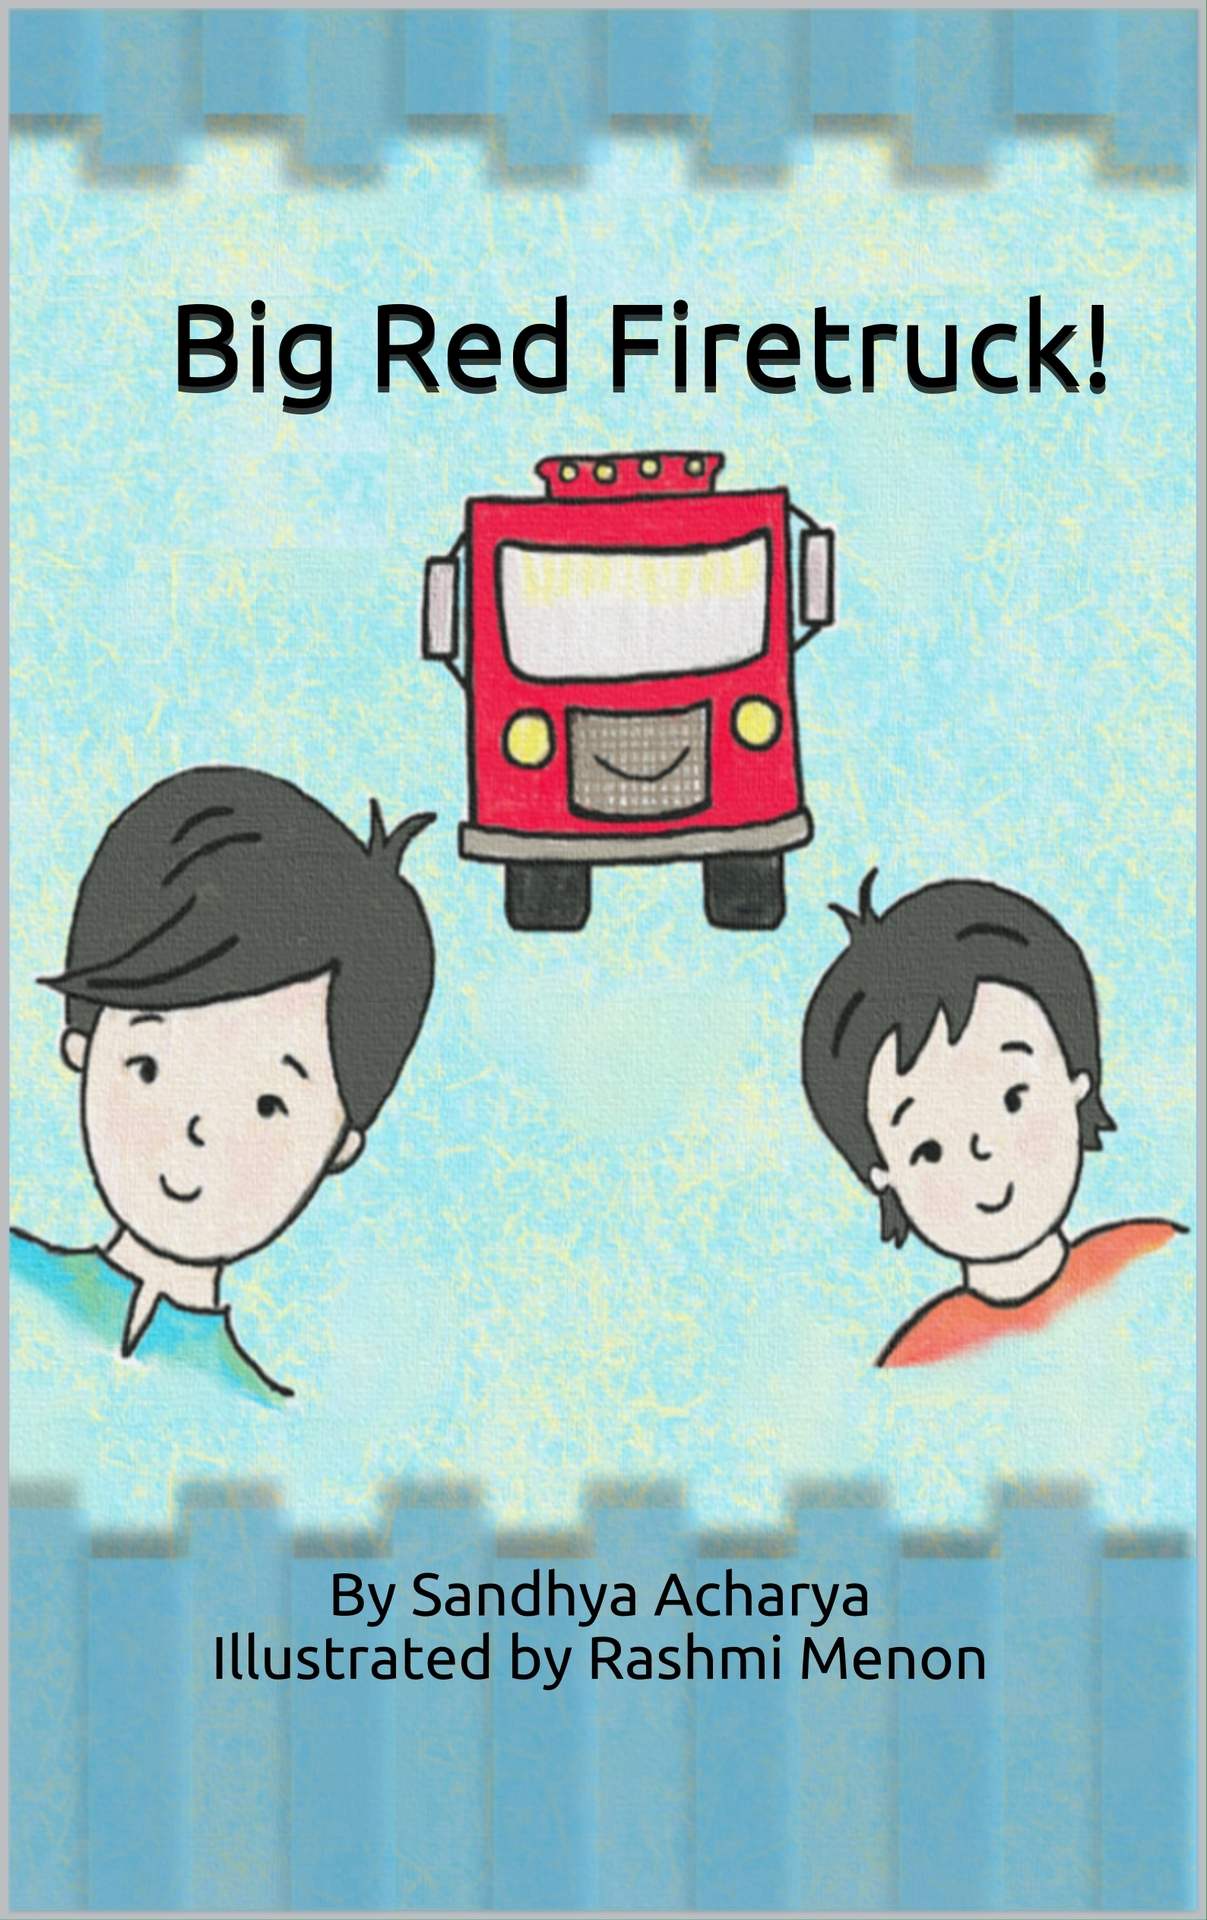 FREE: Big Red Firetruck! by Sandhya Acharya